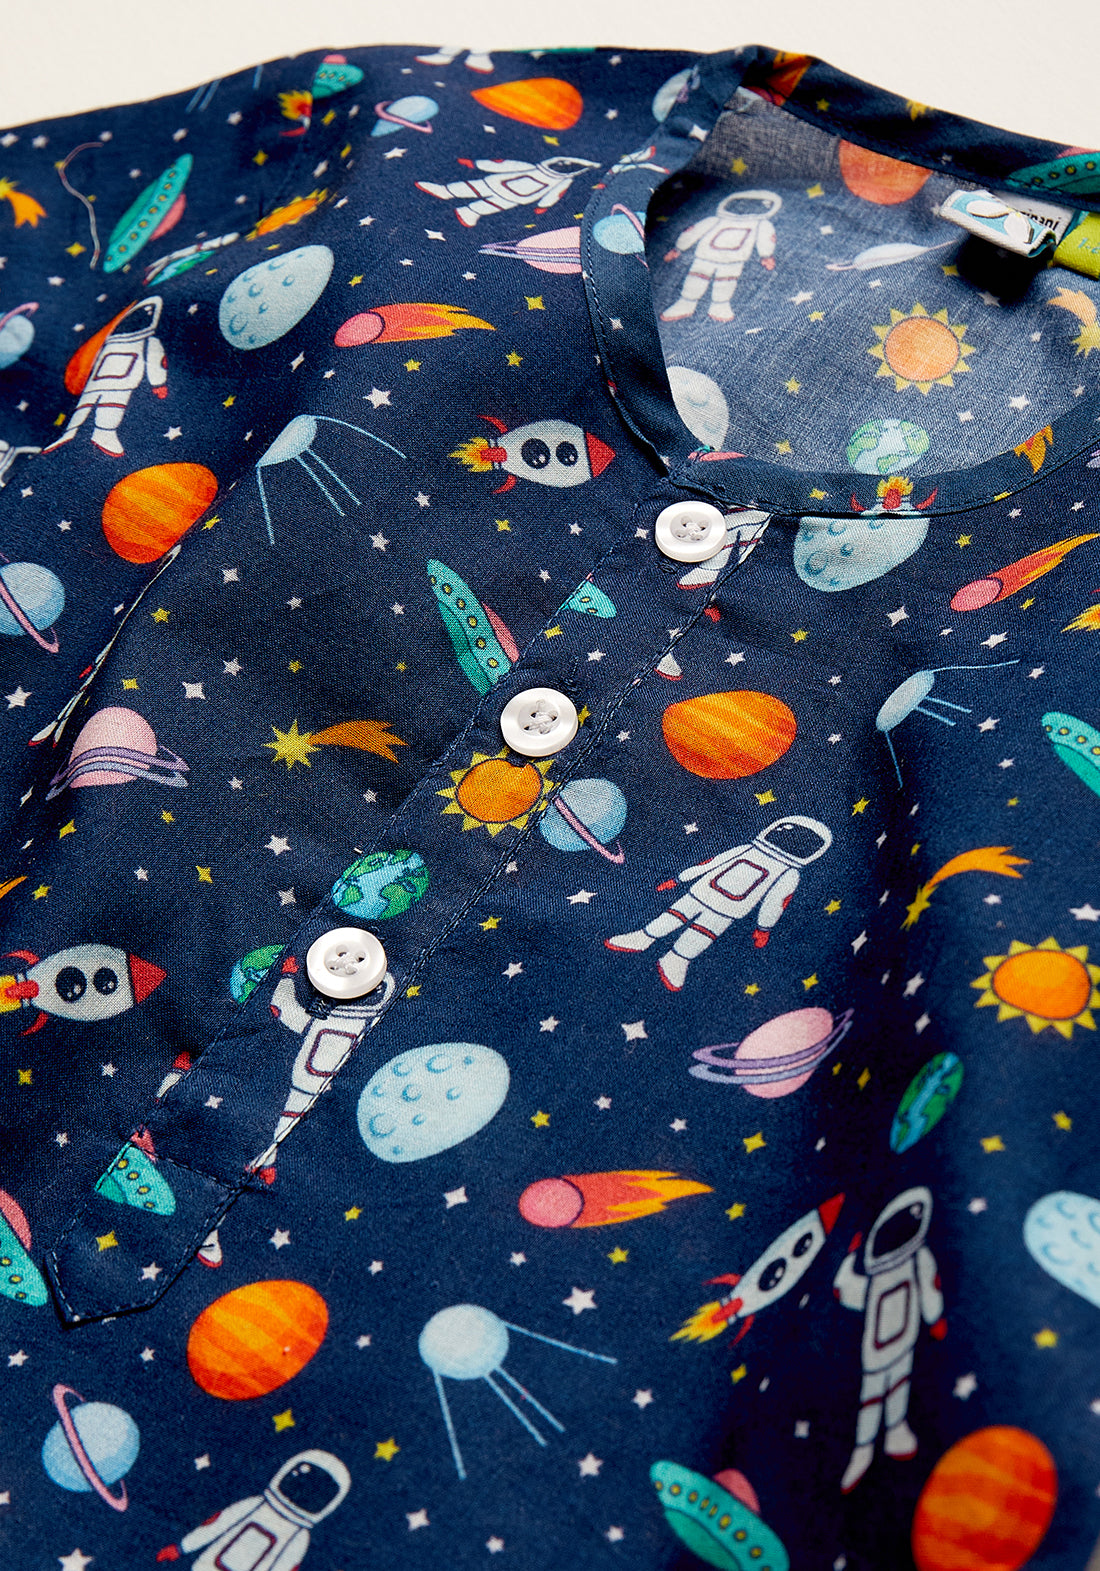 Astronauts Antics Nightwear Set